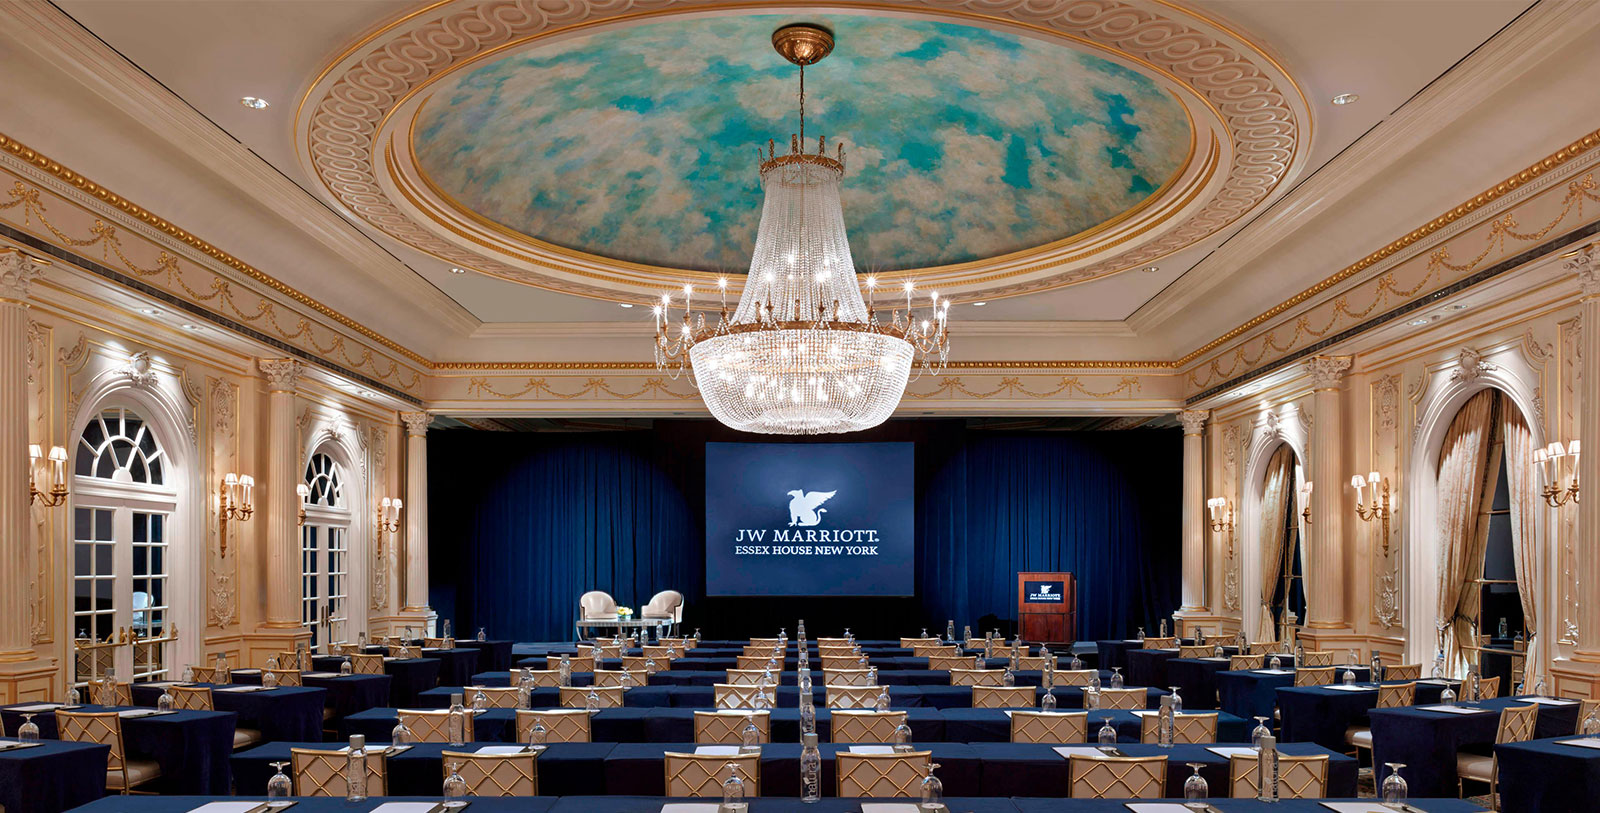 Image of Ballroom, JW Marriott Essex House New York, New York, 1931, Member of Historic Hotels of America, Experience